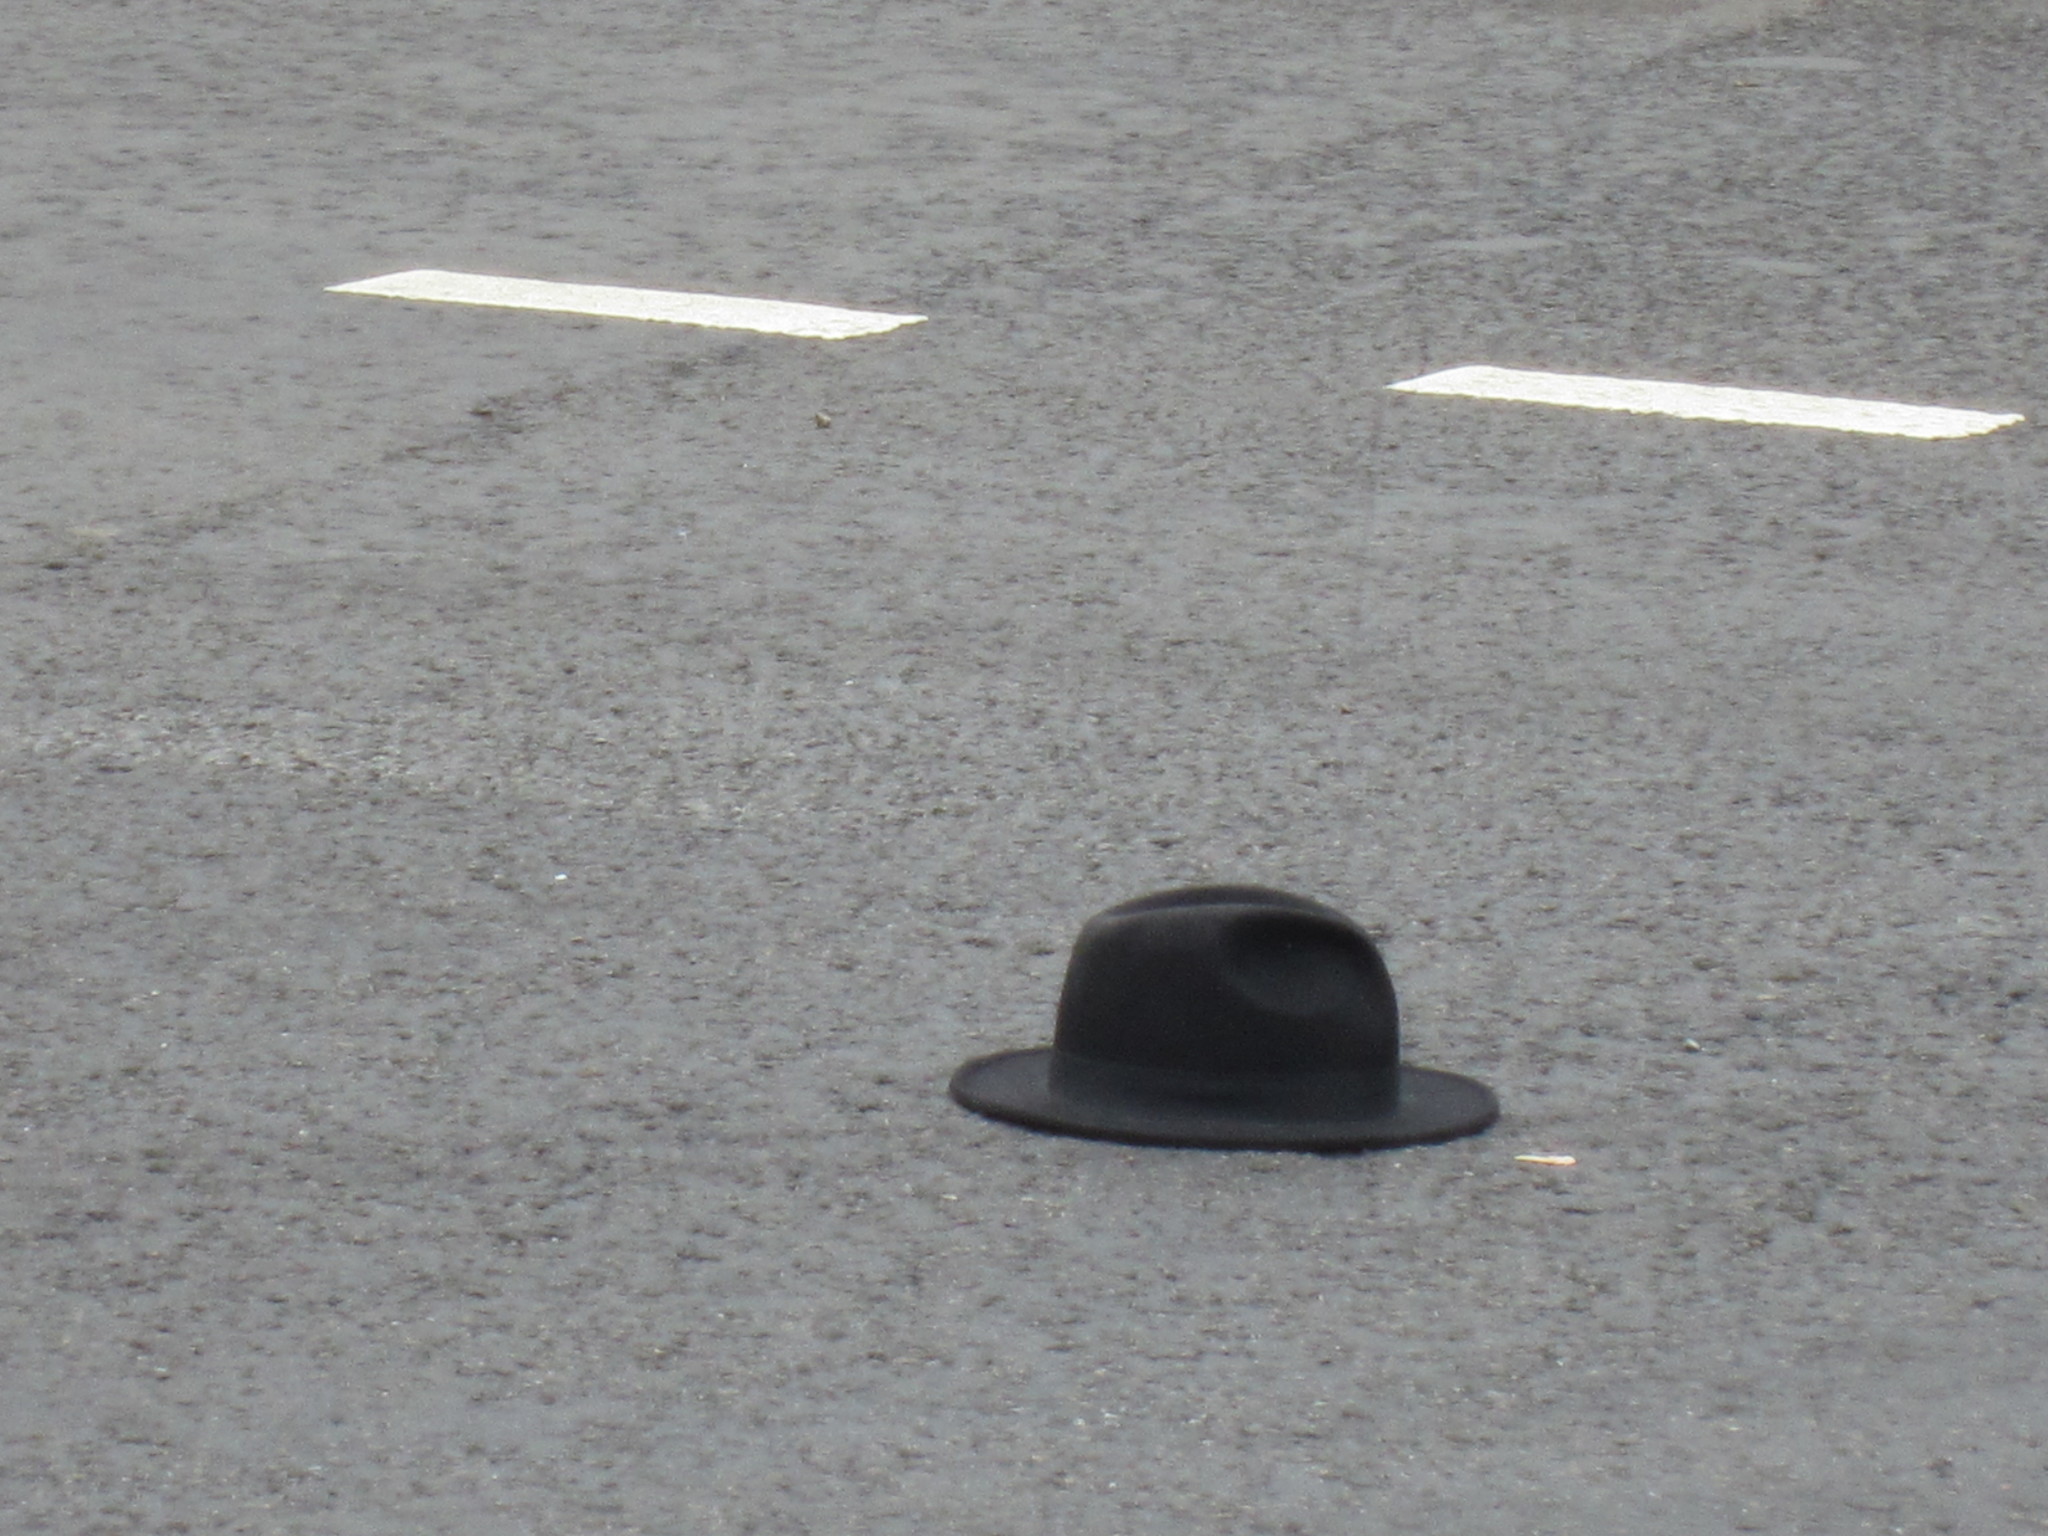 Шляпа упала в воду. Упала шляпа. Шляпка падает. Шляпа упала на пол. Падающая шляпа.